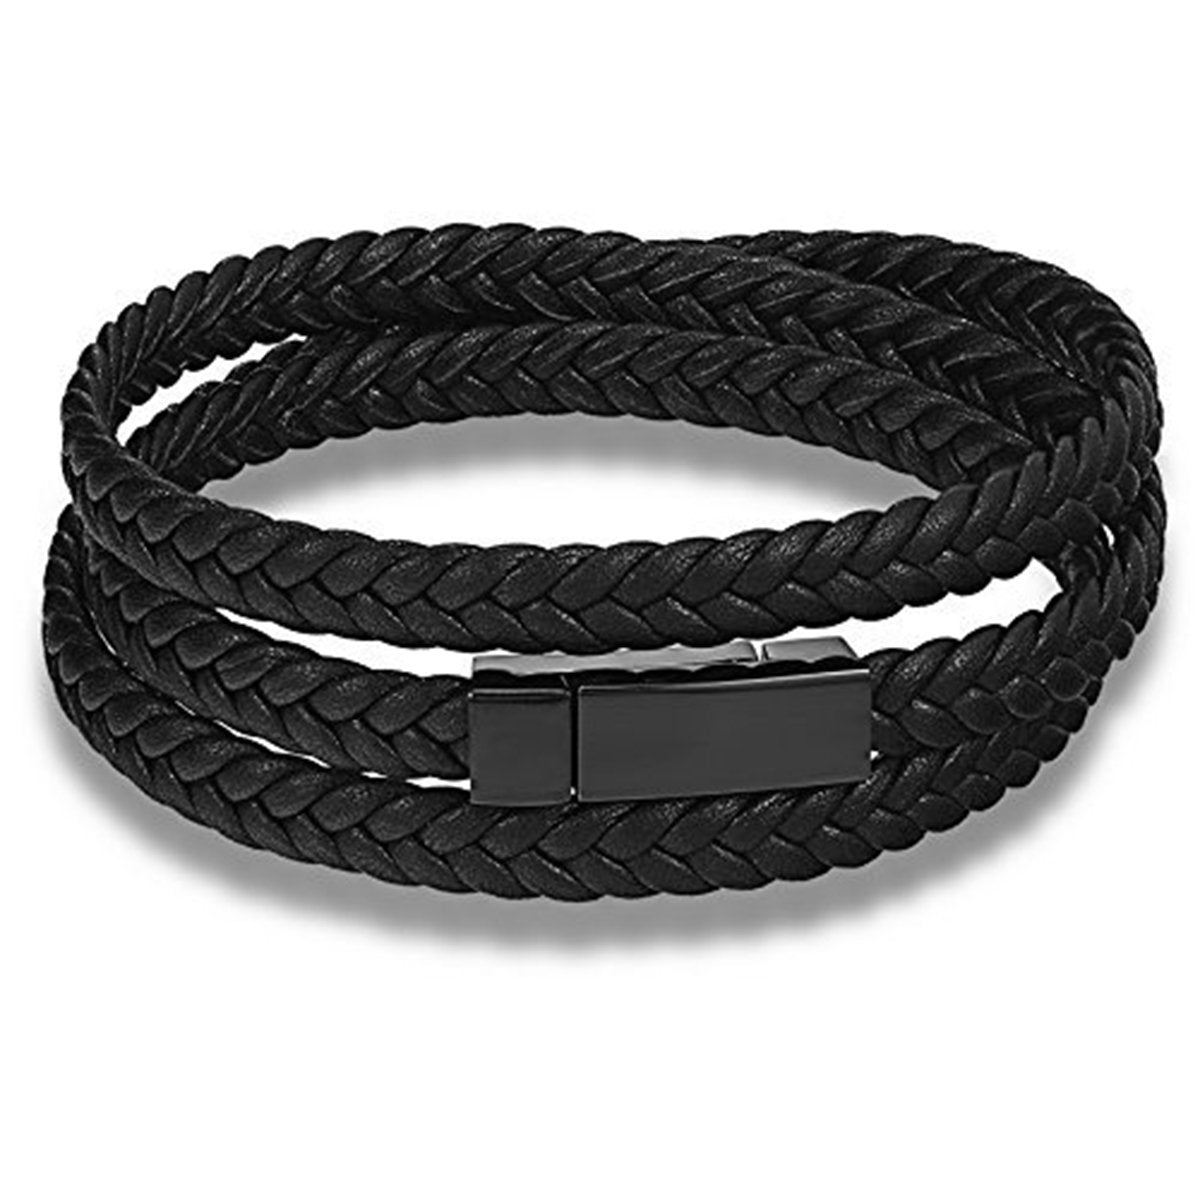 Braided Crafted Black Leather Wrist Band Multi Strand Bracelet Men